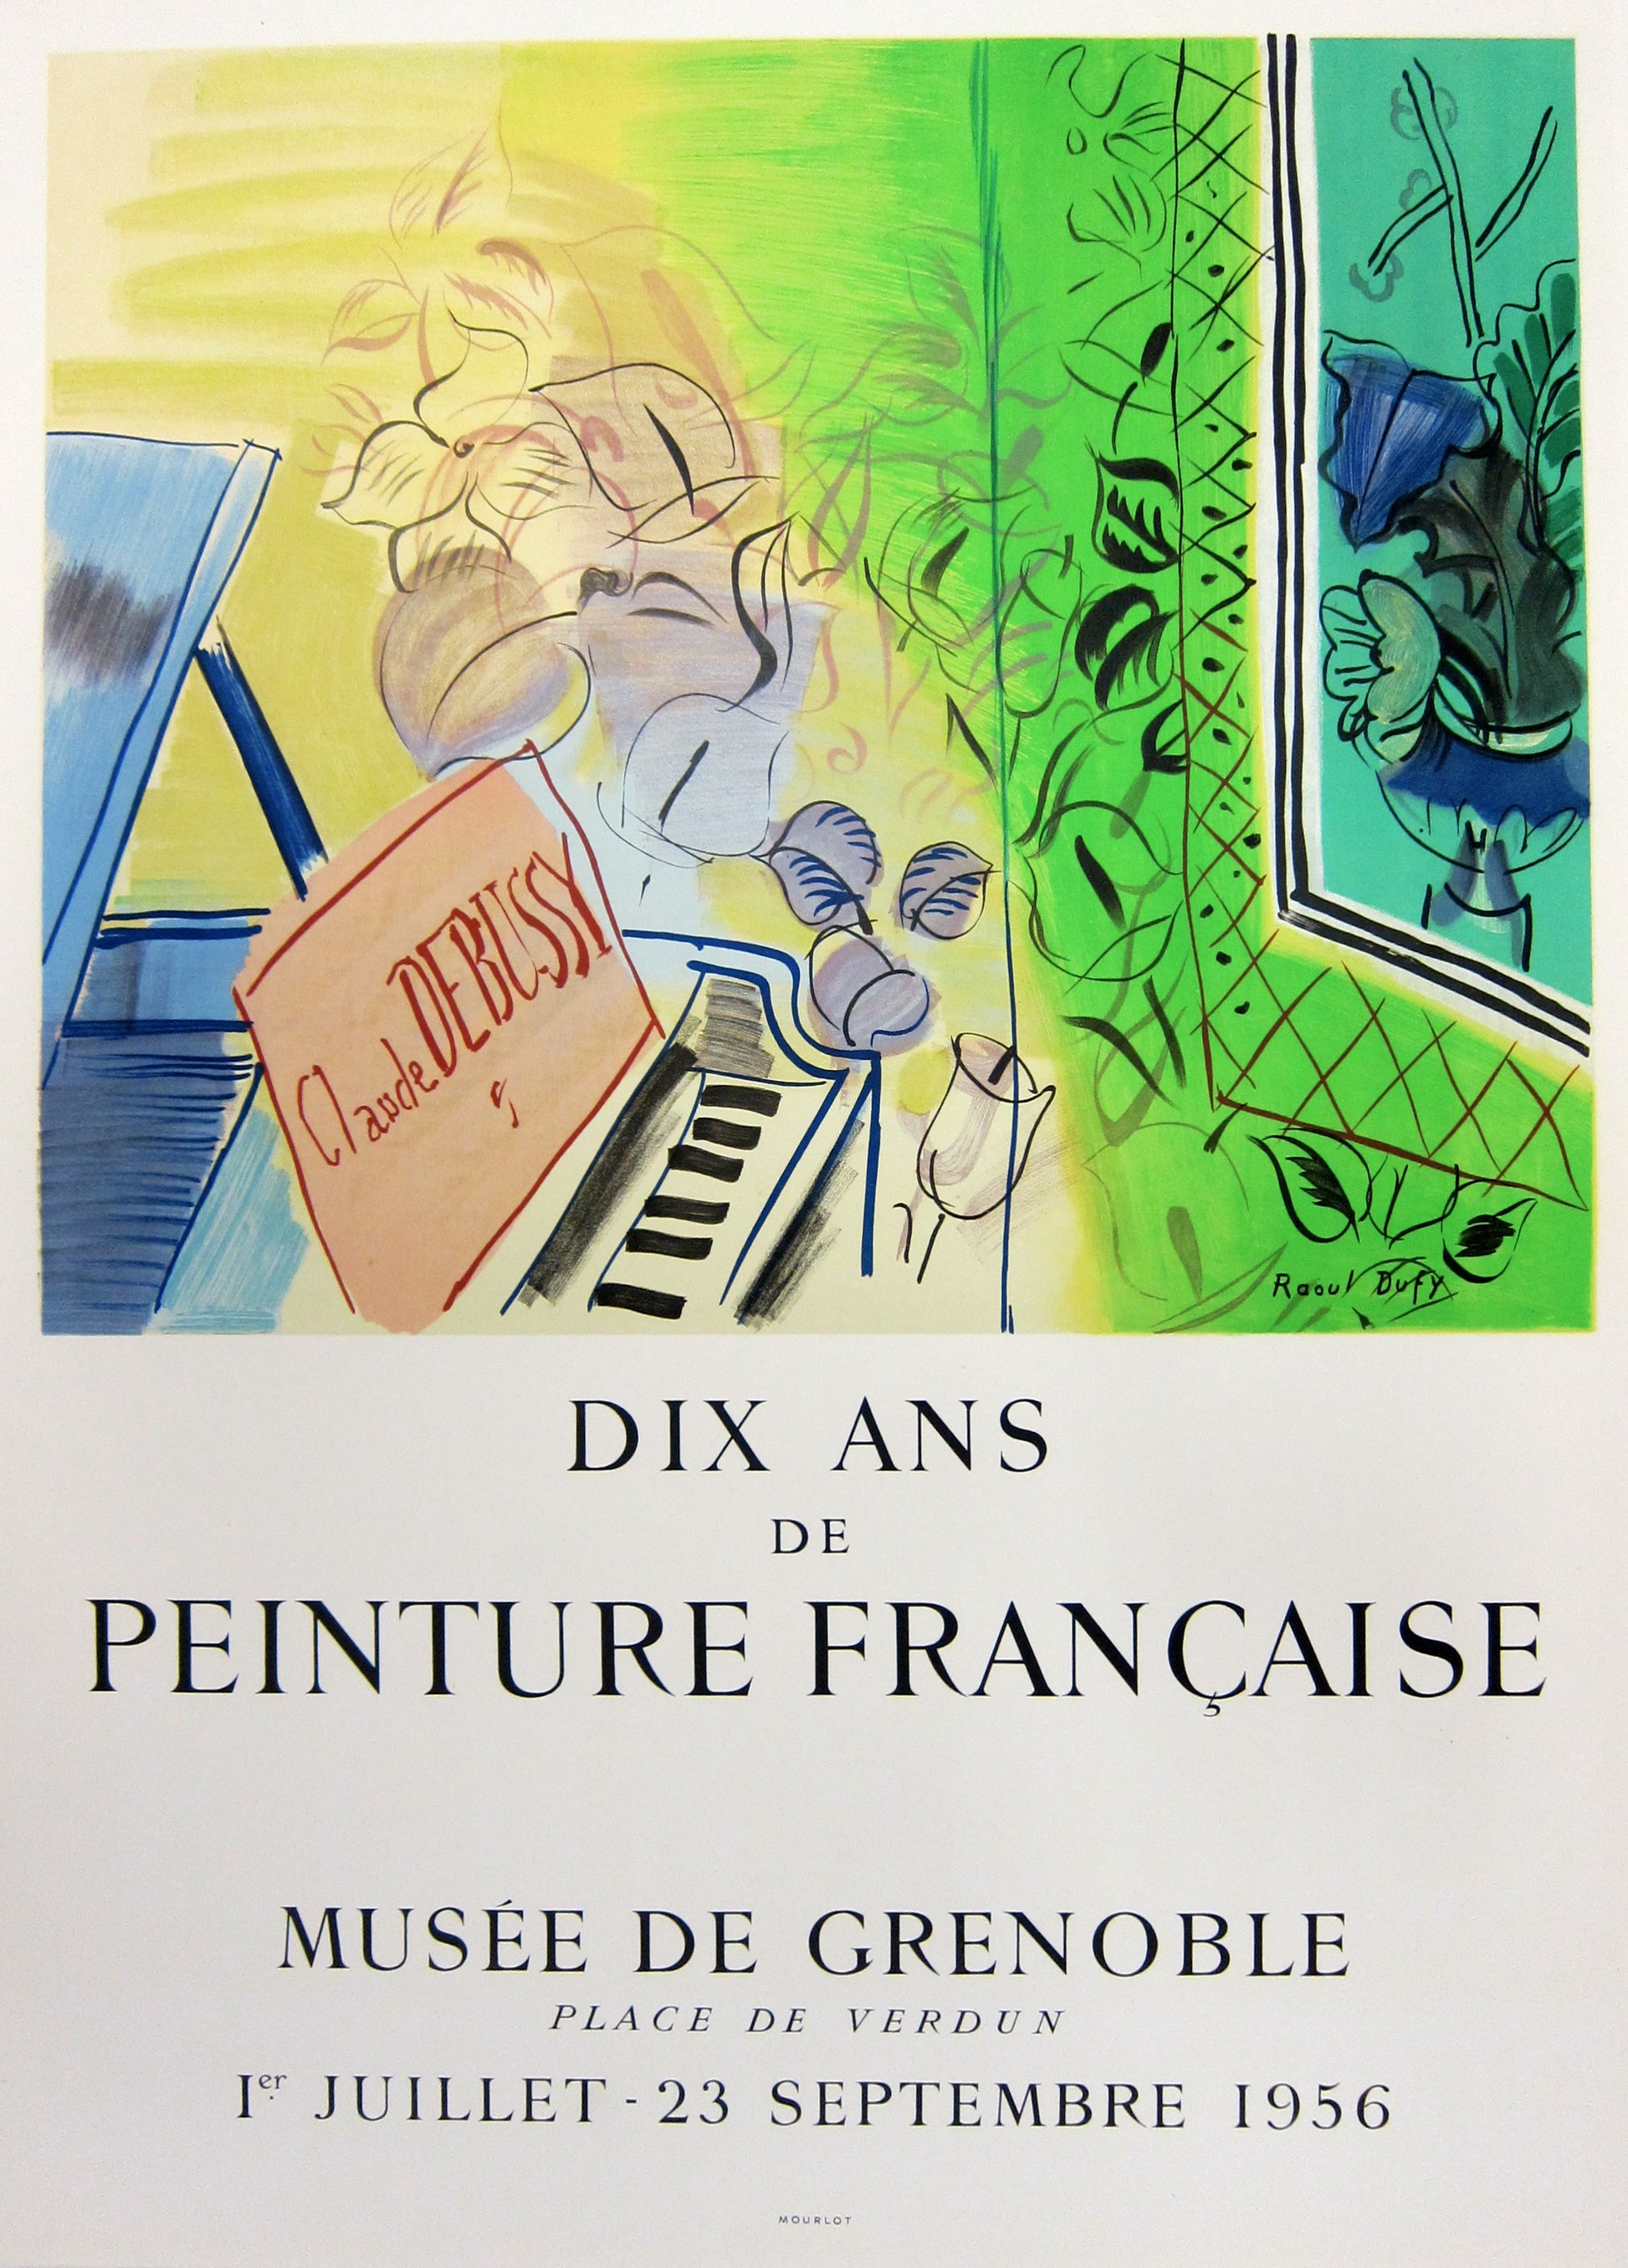 "Homage to Claude Debussy" Musée De Grenoble (after) Raoul Dufy, 1956 - Mourlot Editions - Fine_Art - Poster - Lithograph - Wall Art - Vintage - Prints - Original